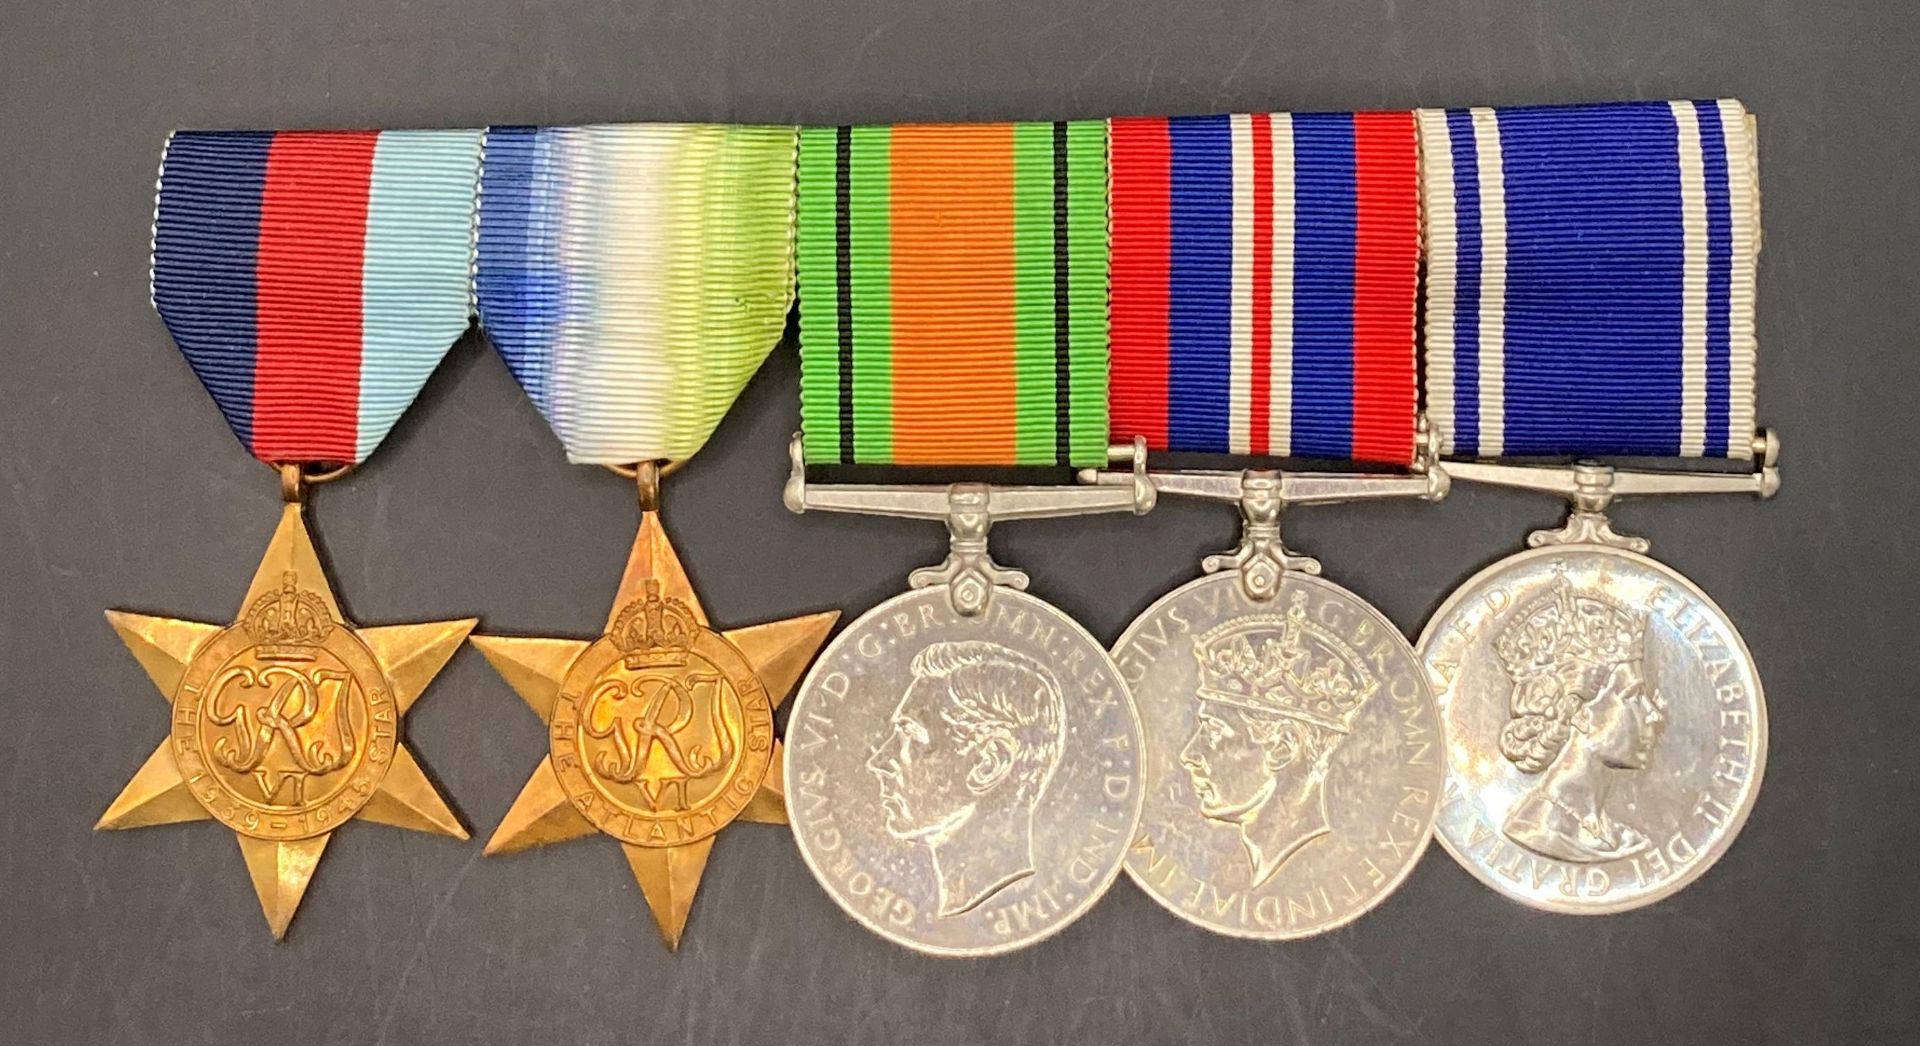 Four World War II Medals - 1939-1945 Star, Atlantic Star,